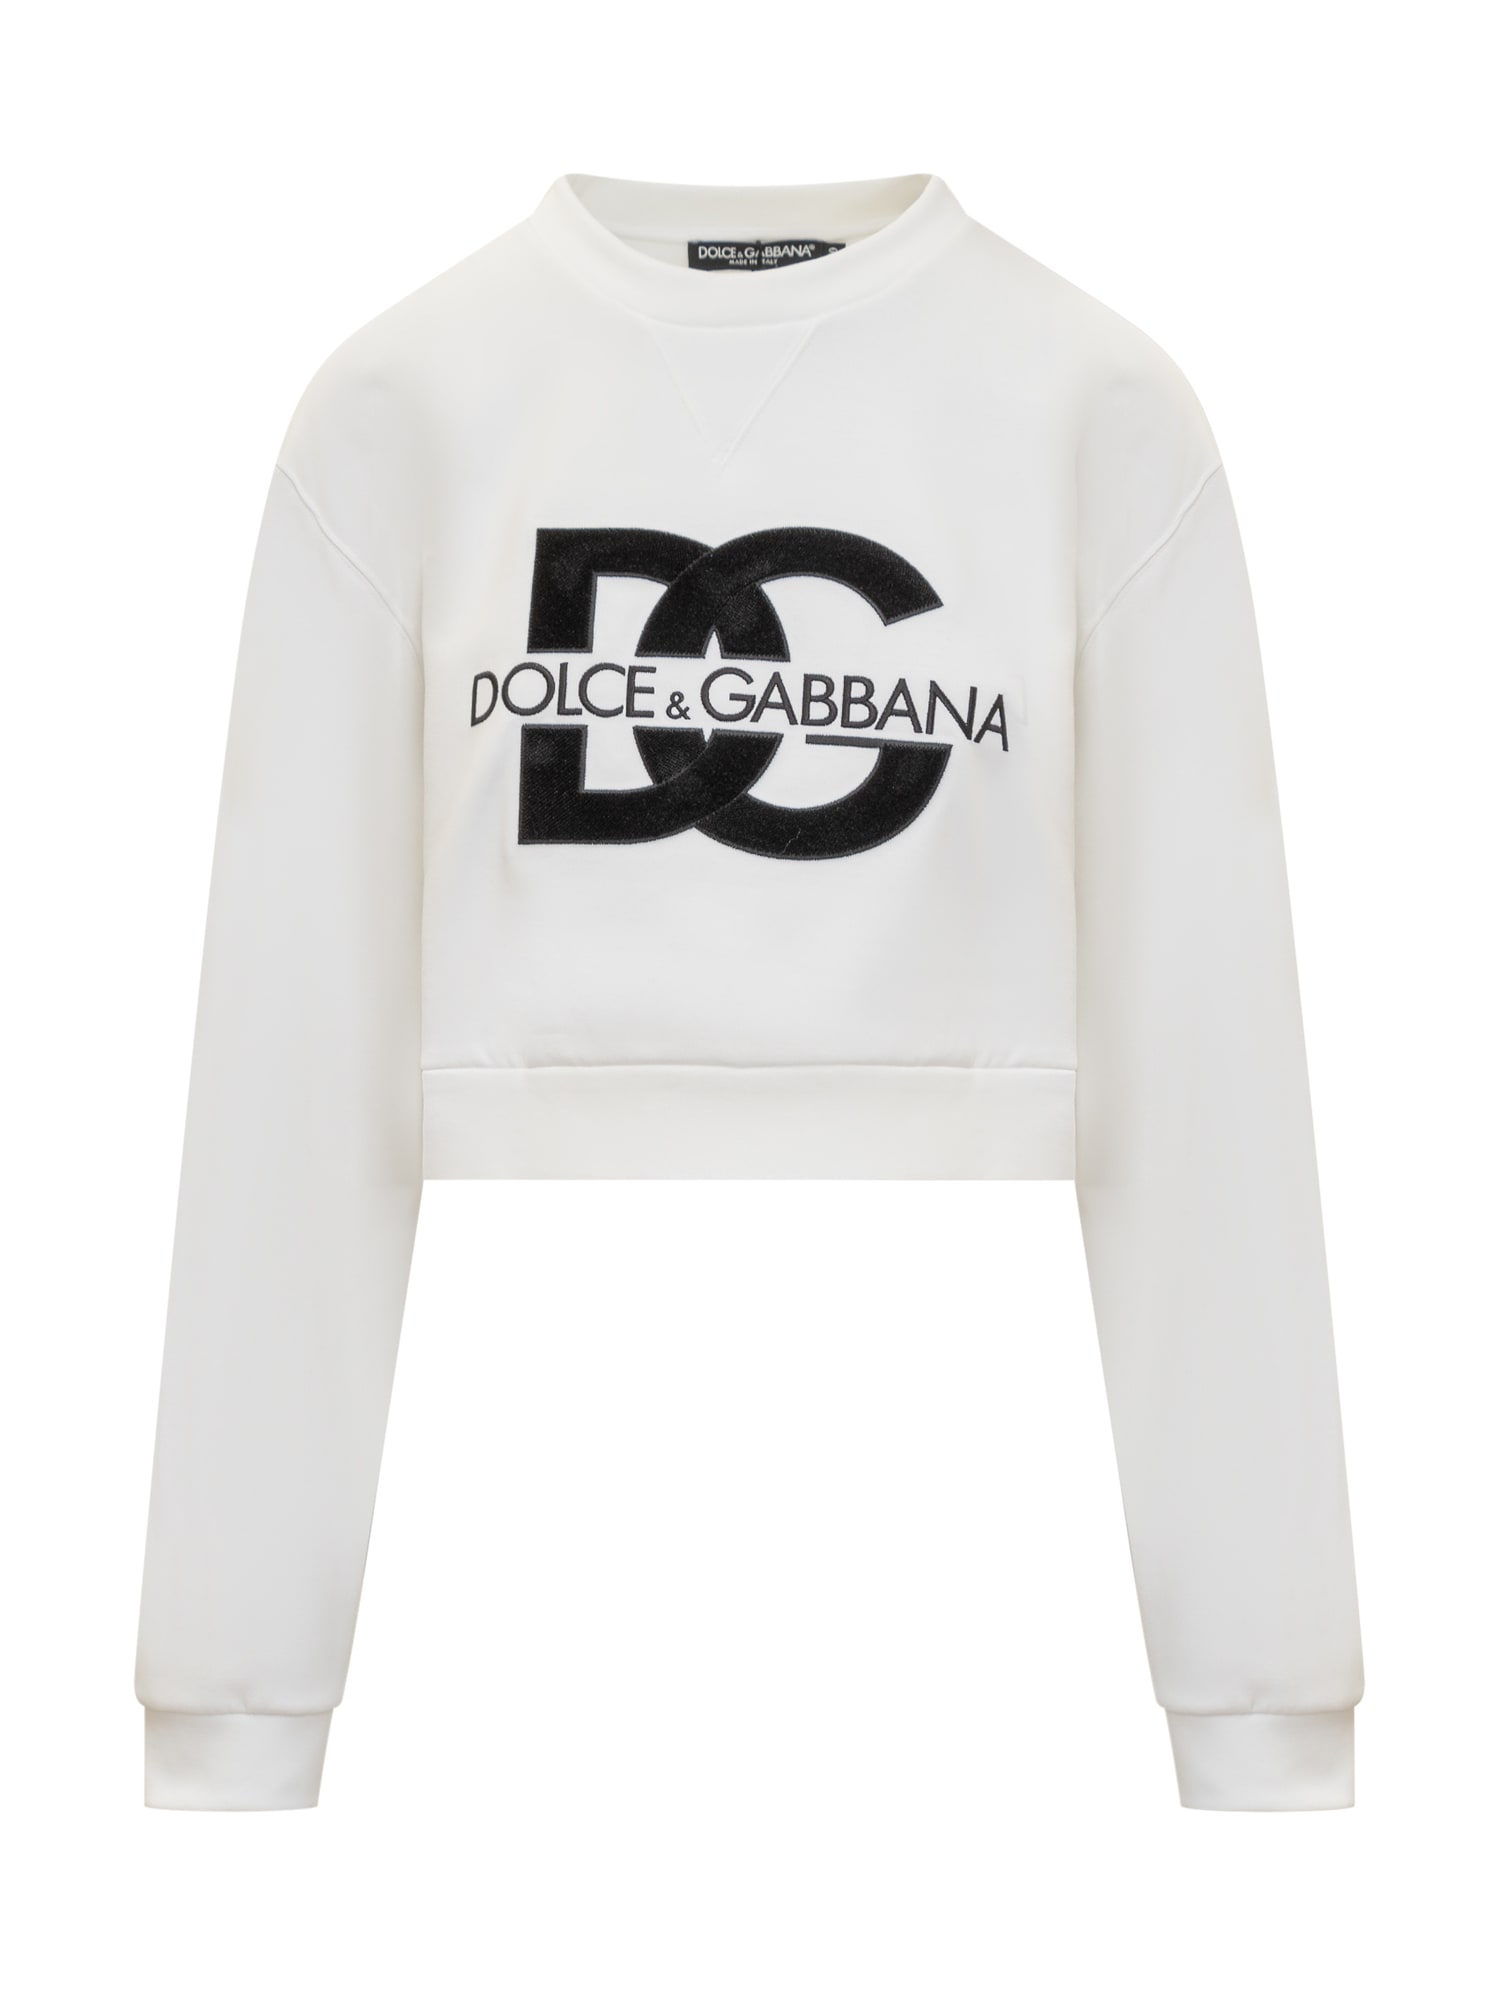 Dolce & Gabbana Jersey Sweatshirt With Dg Embroidery In Bianco Ottico